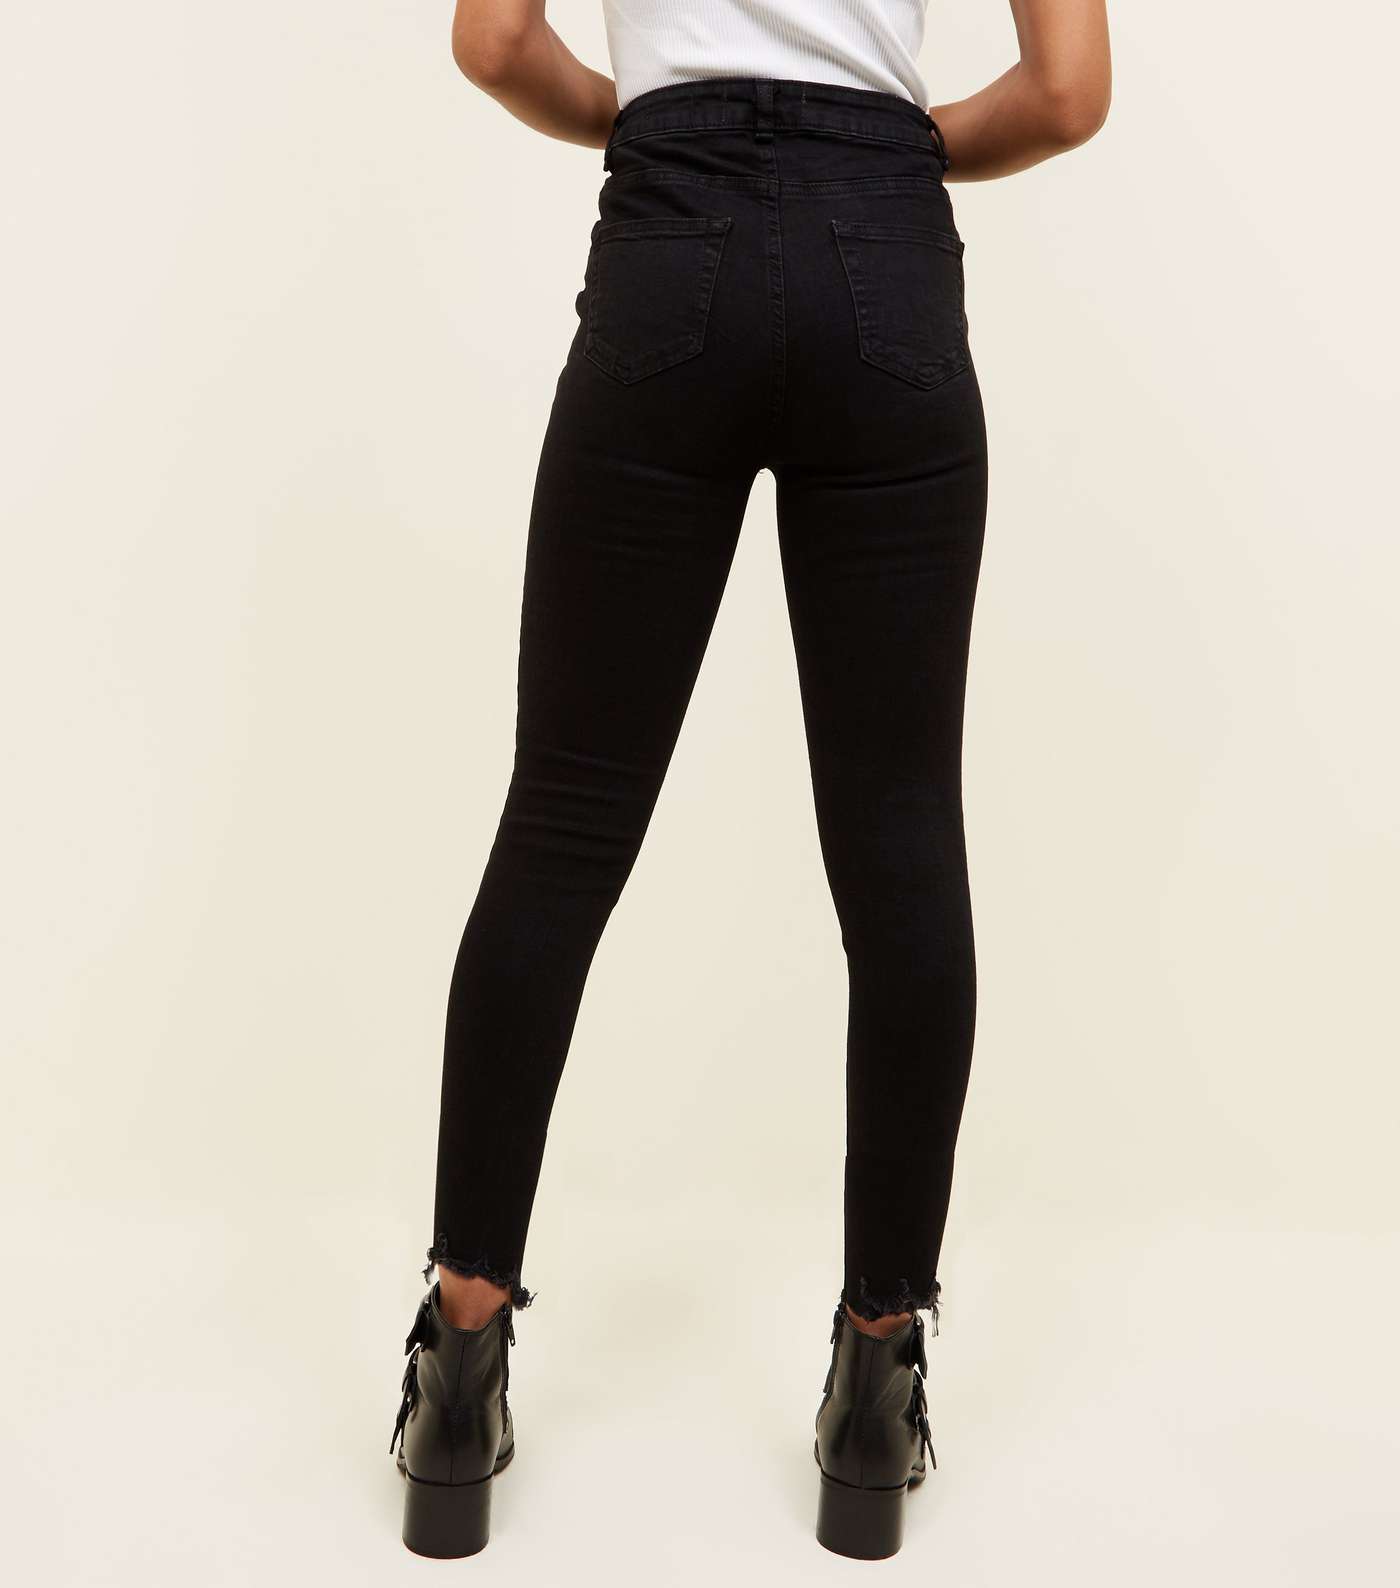 Black Ripped Ankle Grazer Skinny Jenna Jeans Image 3